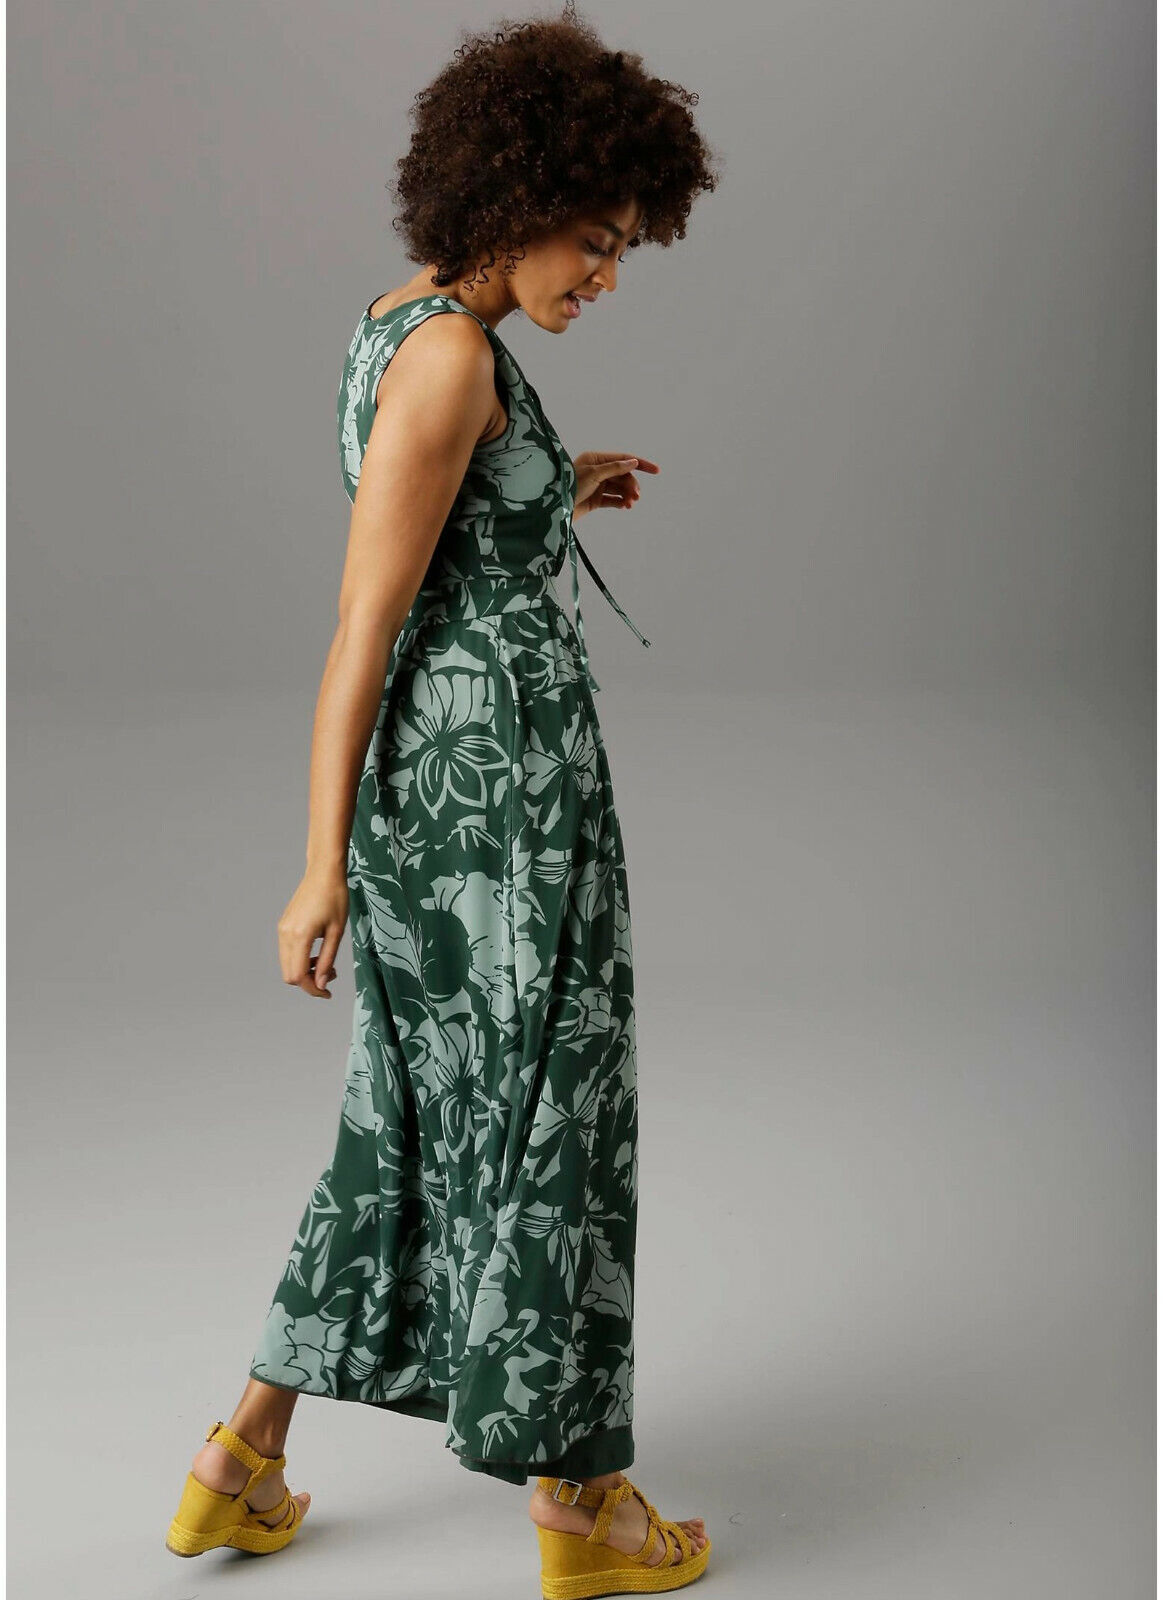 Aniston SELECTED Sommerkleid Maxikleid, grün-hellgrün. NEU!!! SALE%%% | eBay